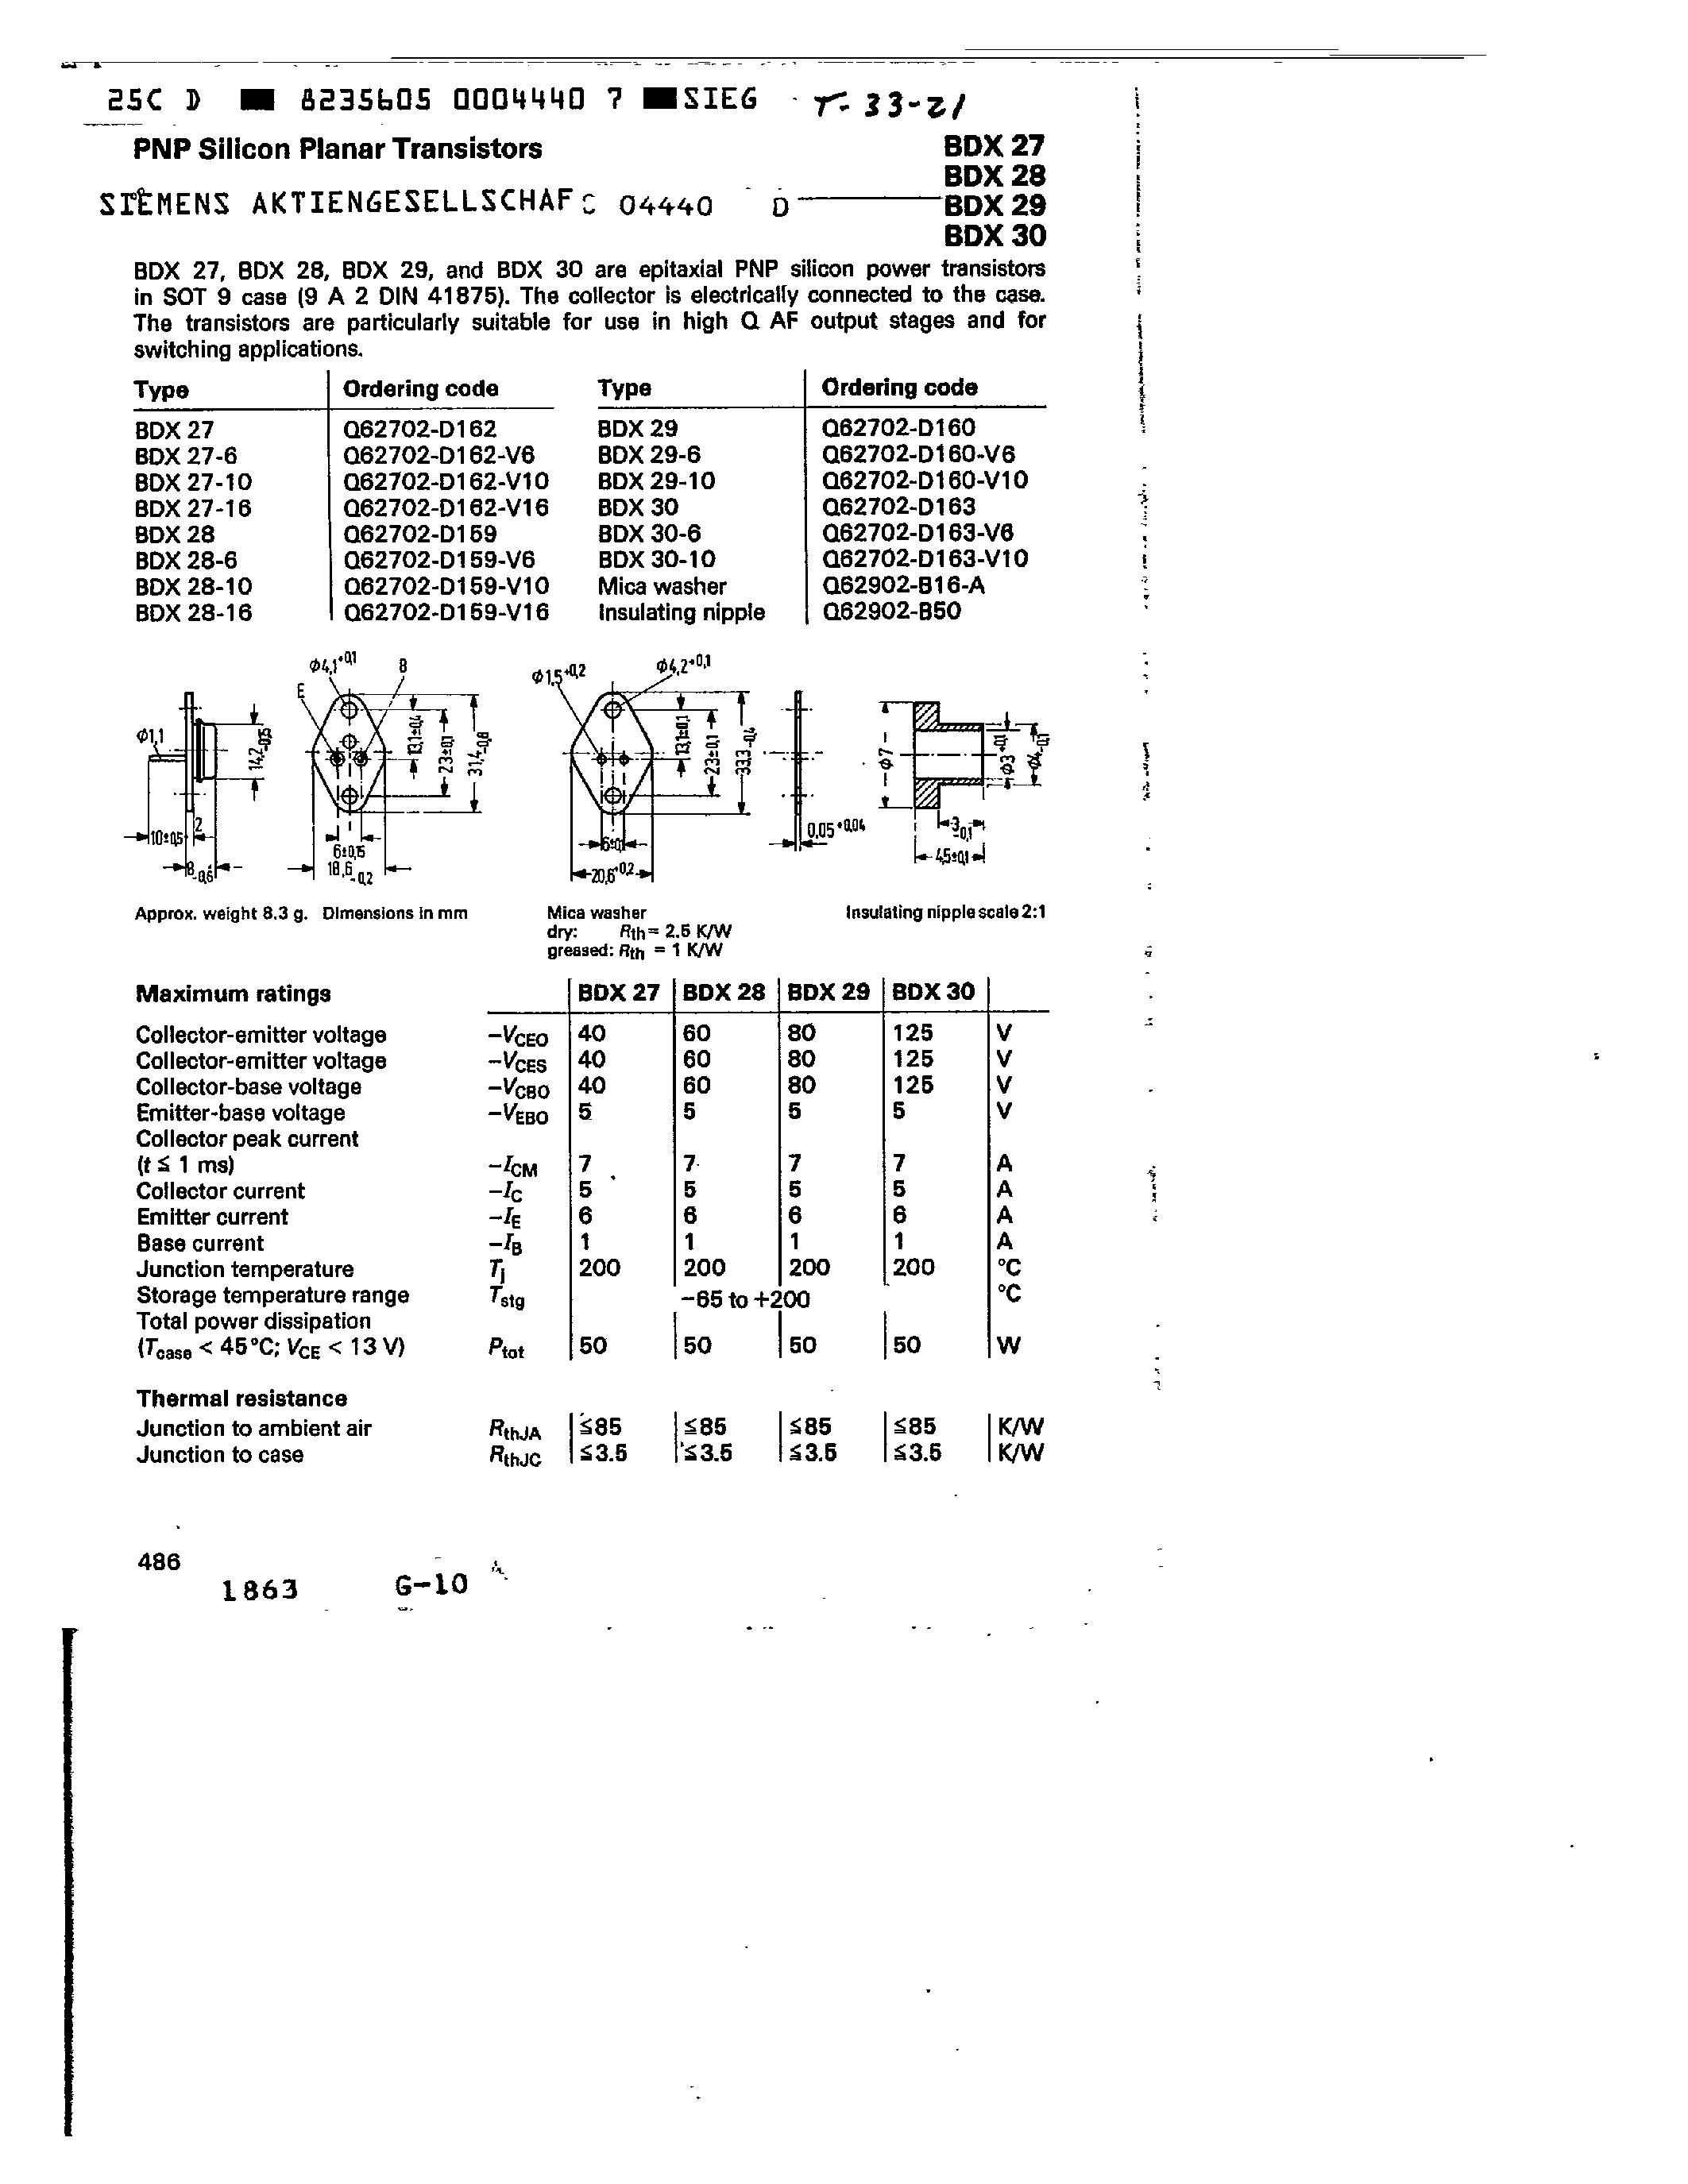 Datasheet BDX30 - PNP SILICON PLANAR TRANSISTORS page 1